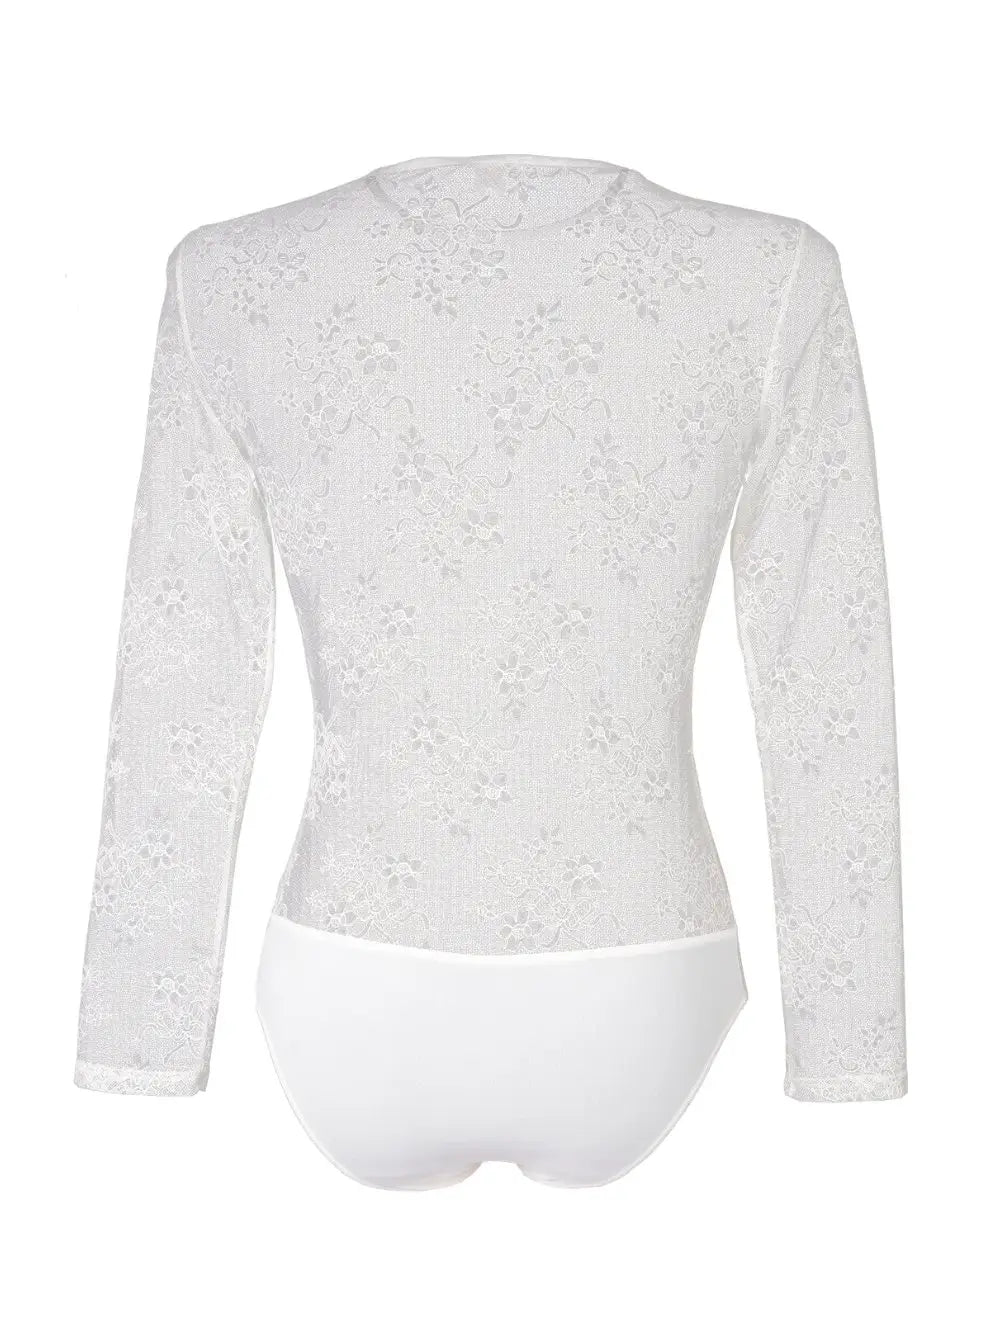 White Lace Long Sleeve Bodysuit